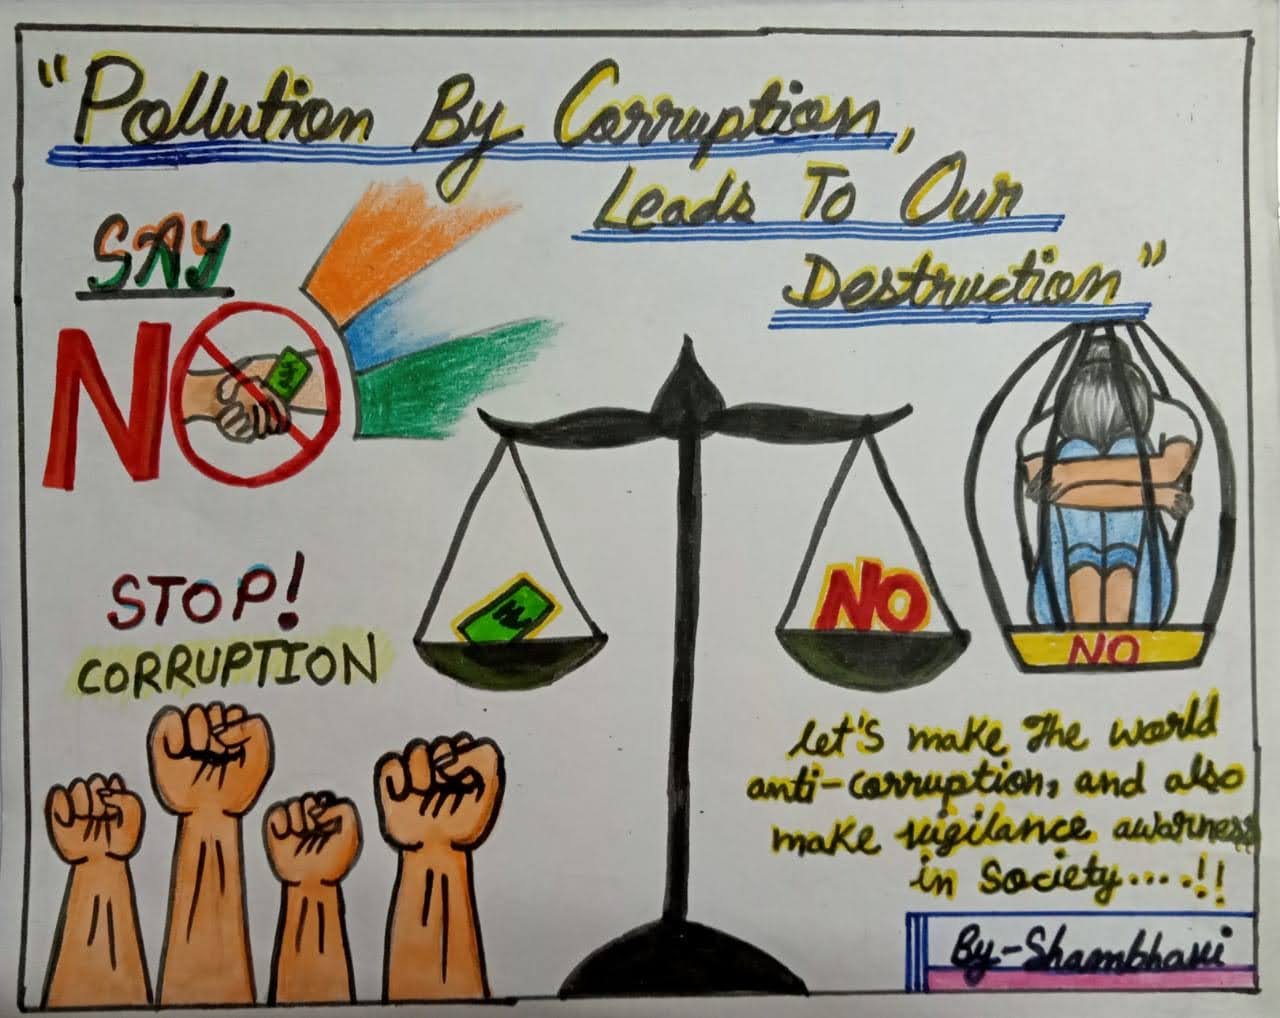 Post promotion anti-corruption comic strips illustration image_picture free  download 400380961_lovepik.com